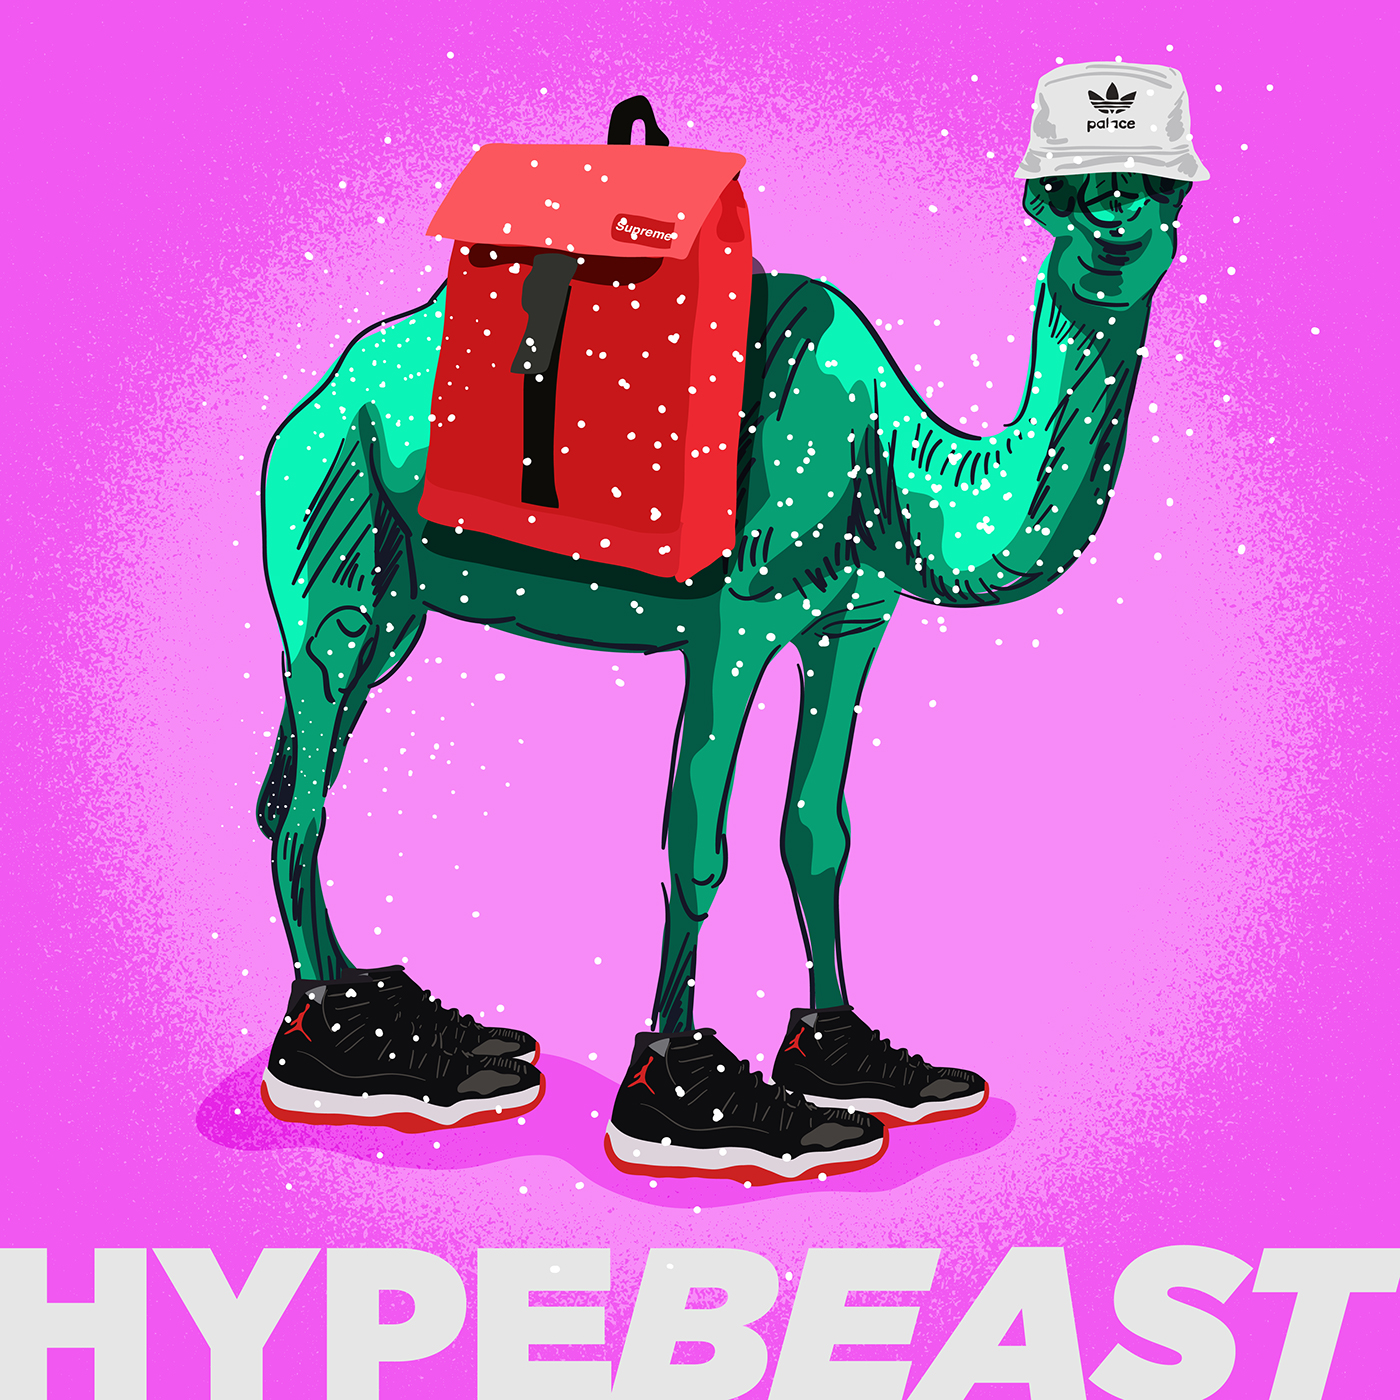 hypebeast yeezy supreme palace brands adidas yeezy boost stussy